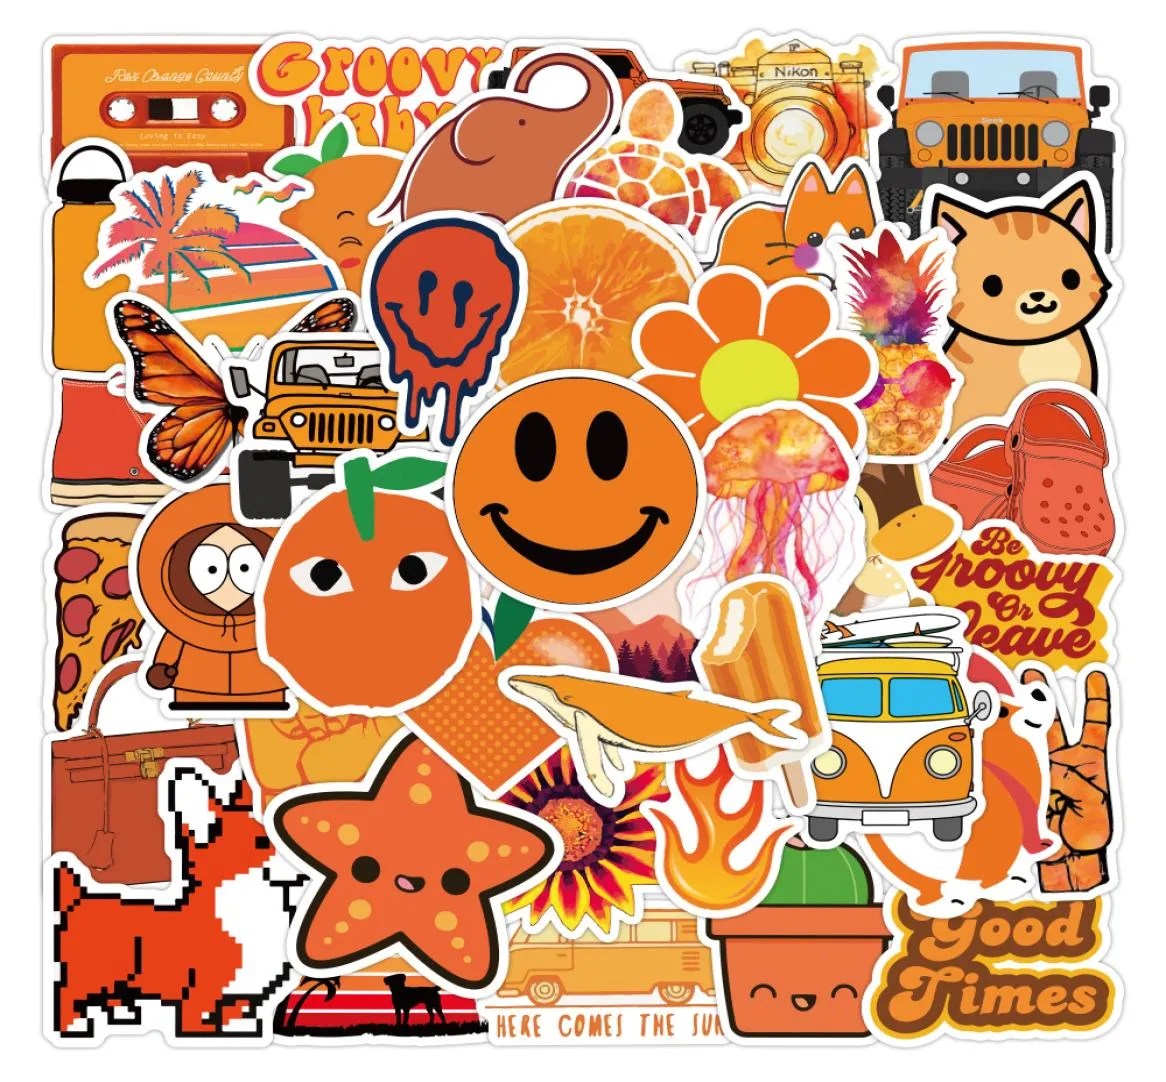 50PCS Cartoon Katze Hund Obst Tiere Mix Nette Graffiti Aufkleber Pack Orange Aufkleber Für Laptop Notebook Auto Diy Telefon kinder Spielzeug1632261